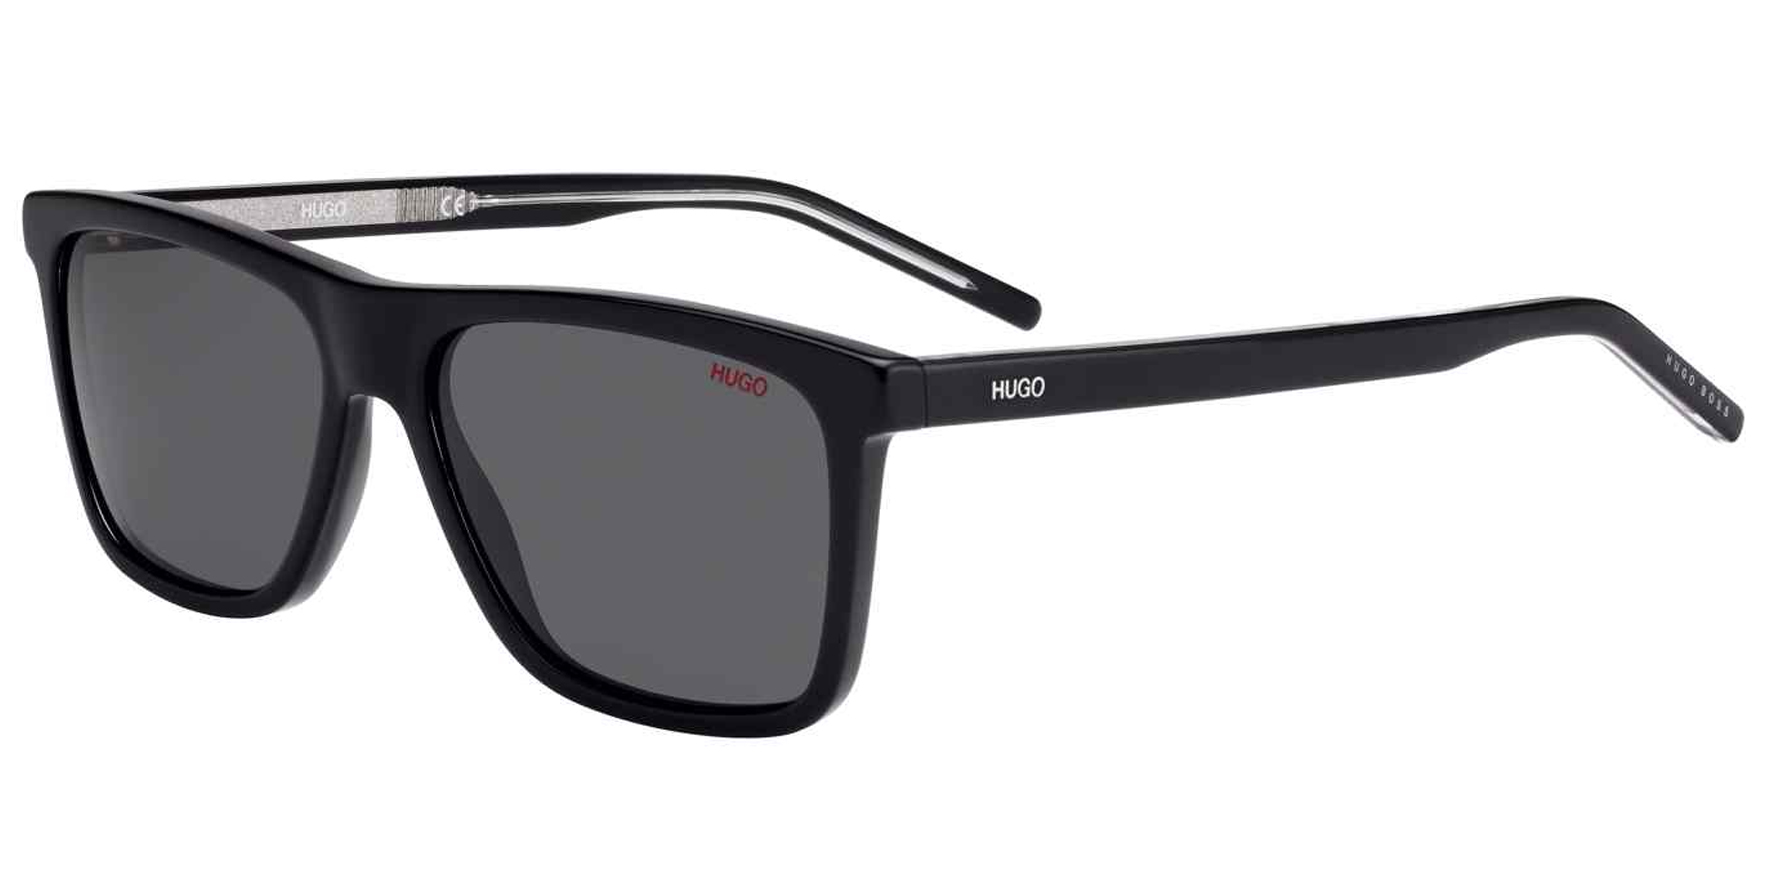 Hugo By Hugo Boss Sunglasses (various styles) $34 + Free Shipping + Free Shipping